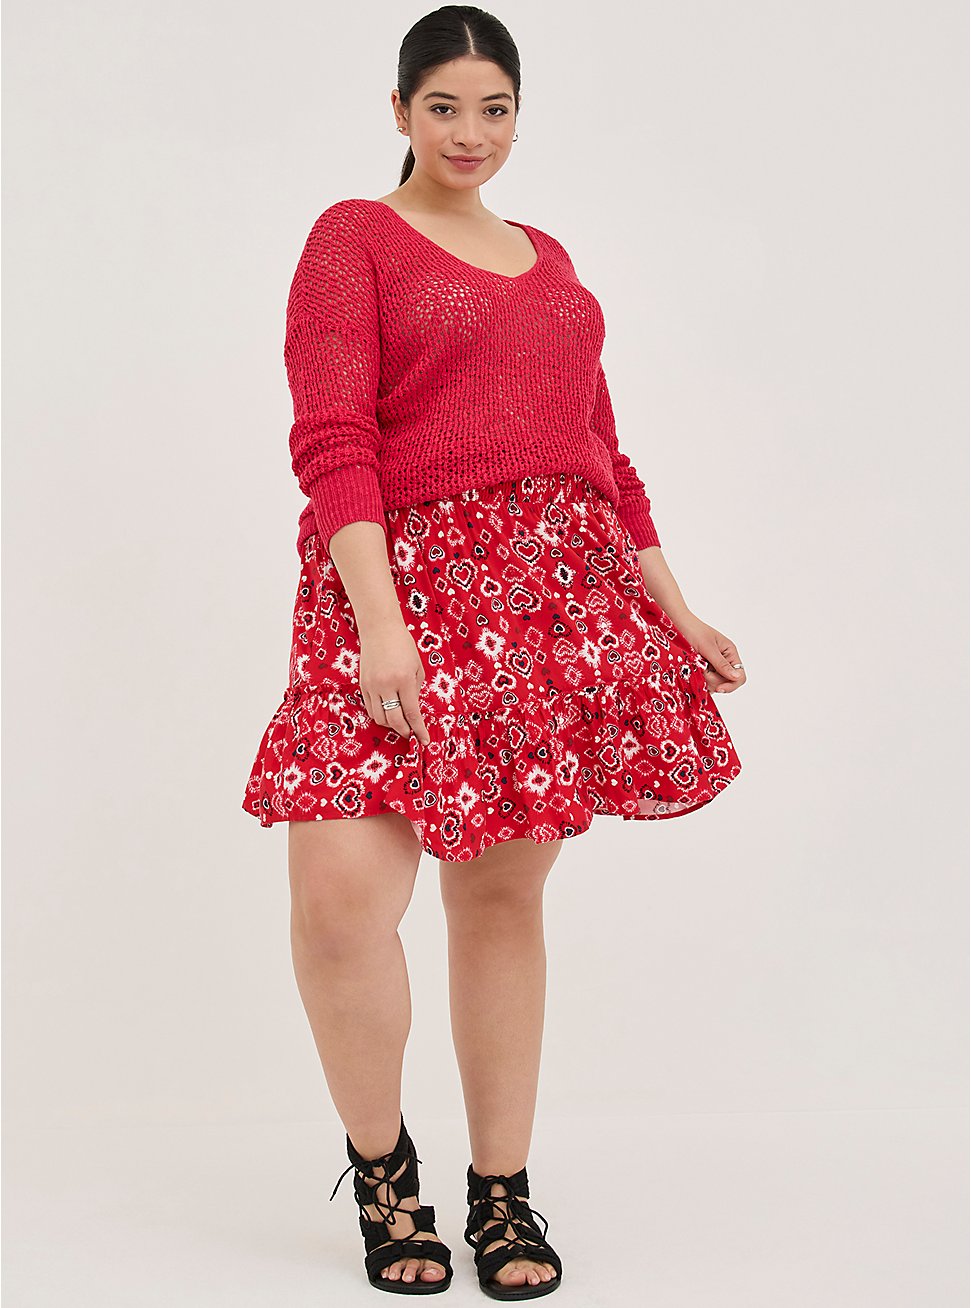 Smocked Ruffle Mini Skirt - Challis Paisley Hearts Bright Red, HEART PRINT, hi-res